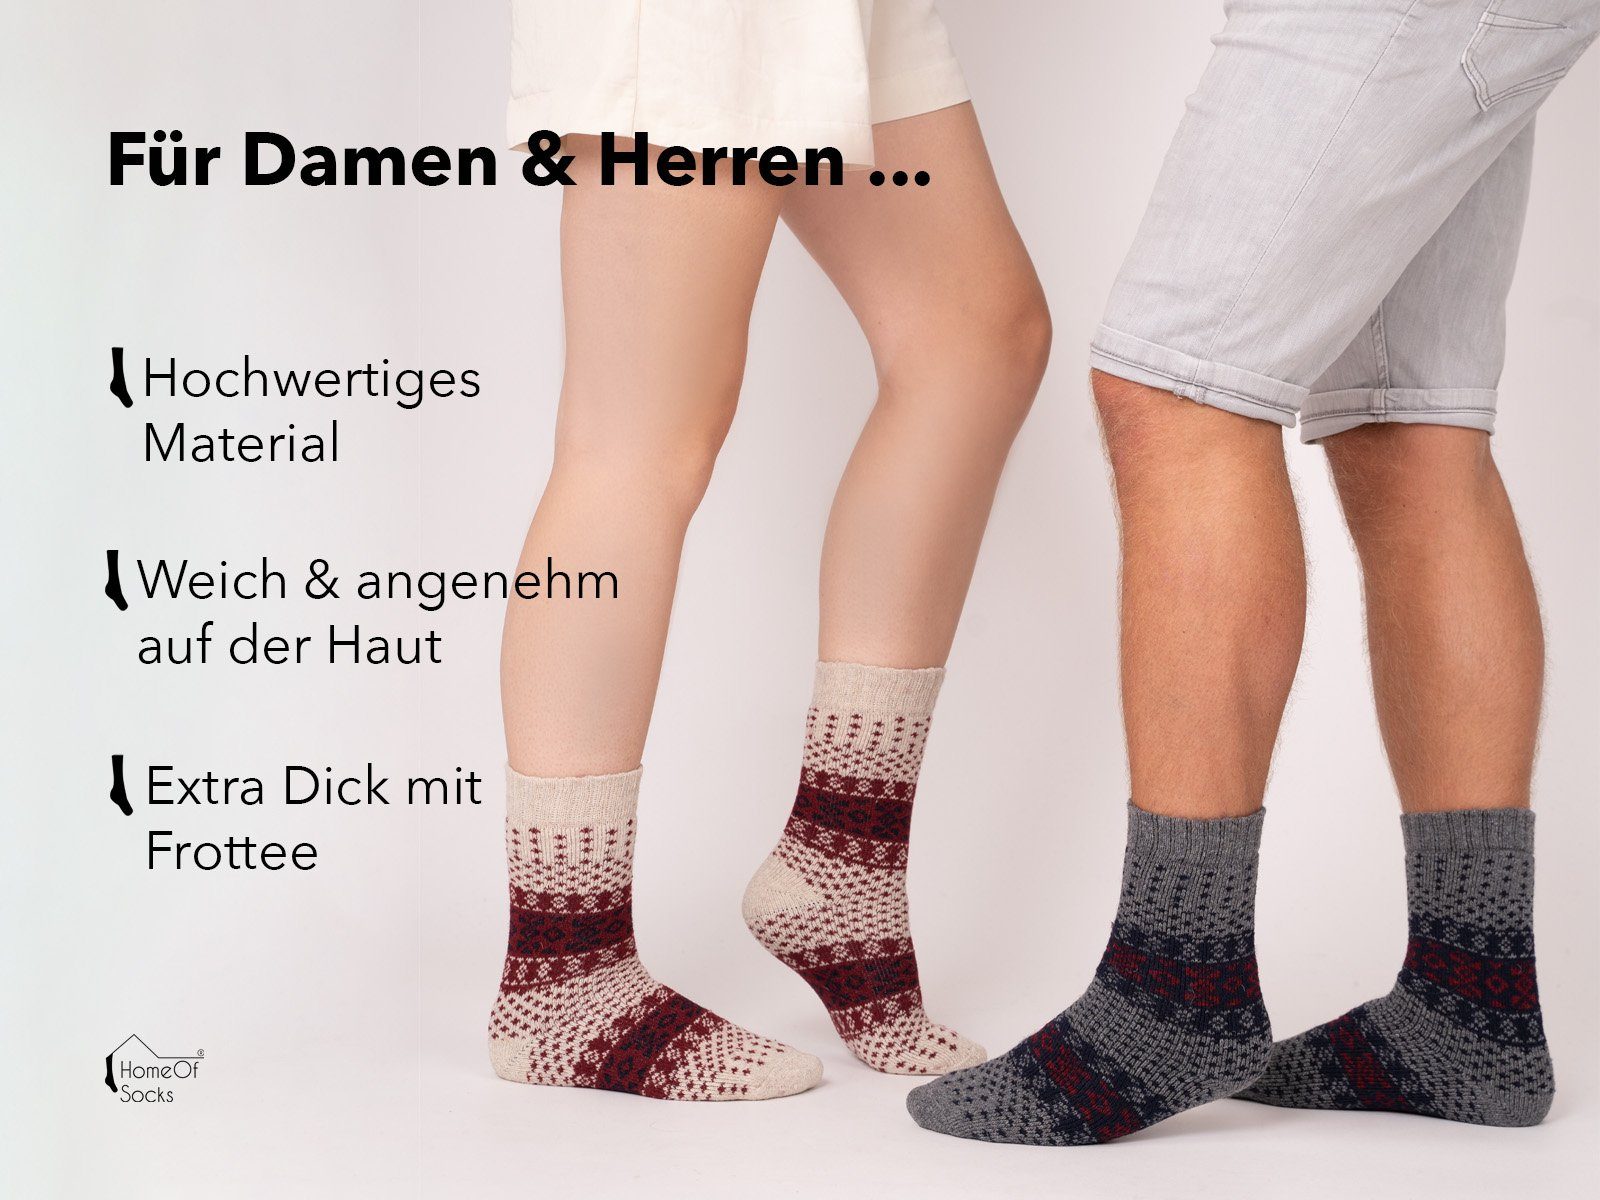 HomeOfSocks Socken Hygge Socken Dick Hohem Herren Für Wollanteil Grau Damen & mit In Bunten Mit Warm 45% Socken Hyggelig Wolle Design Dicke